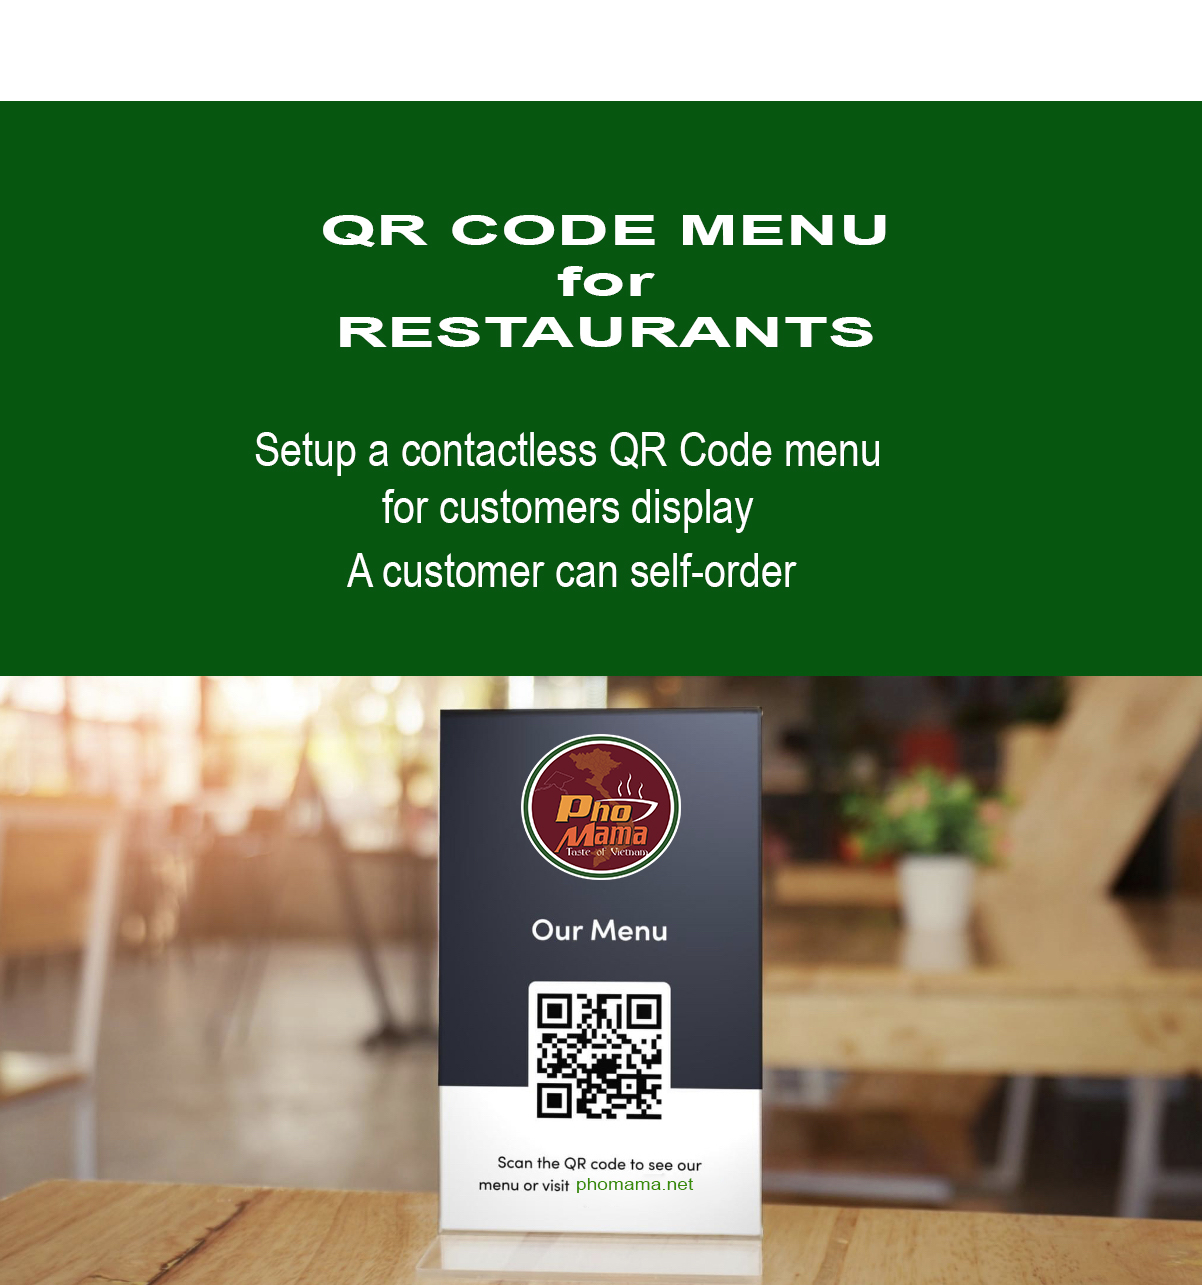 QRcode Restaurant Menu